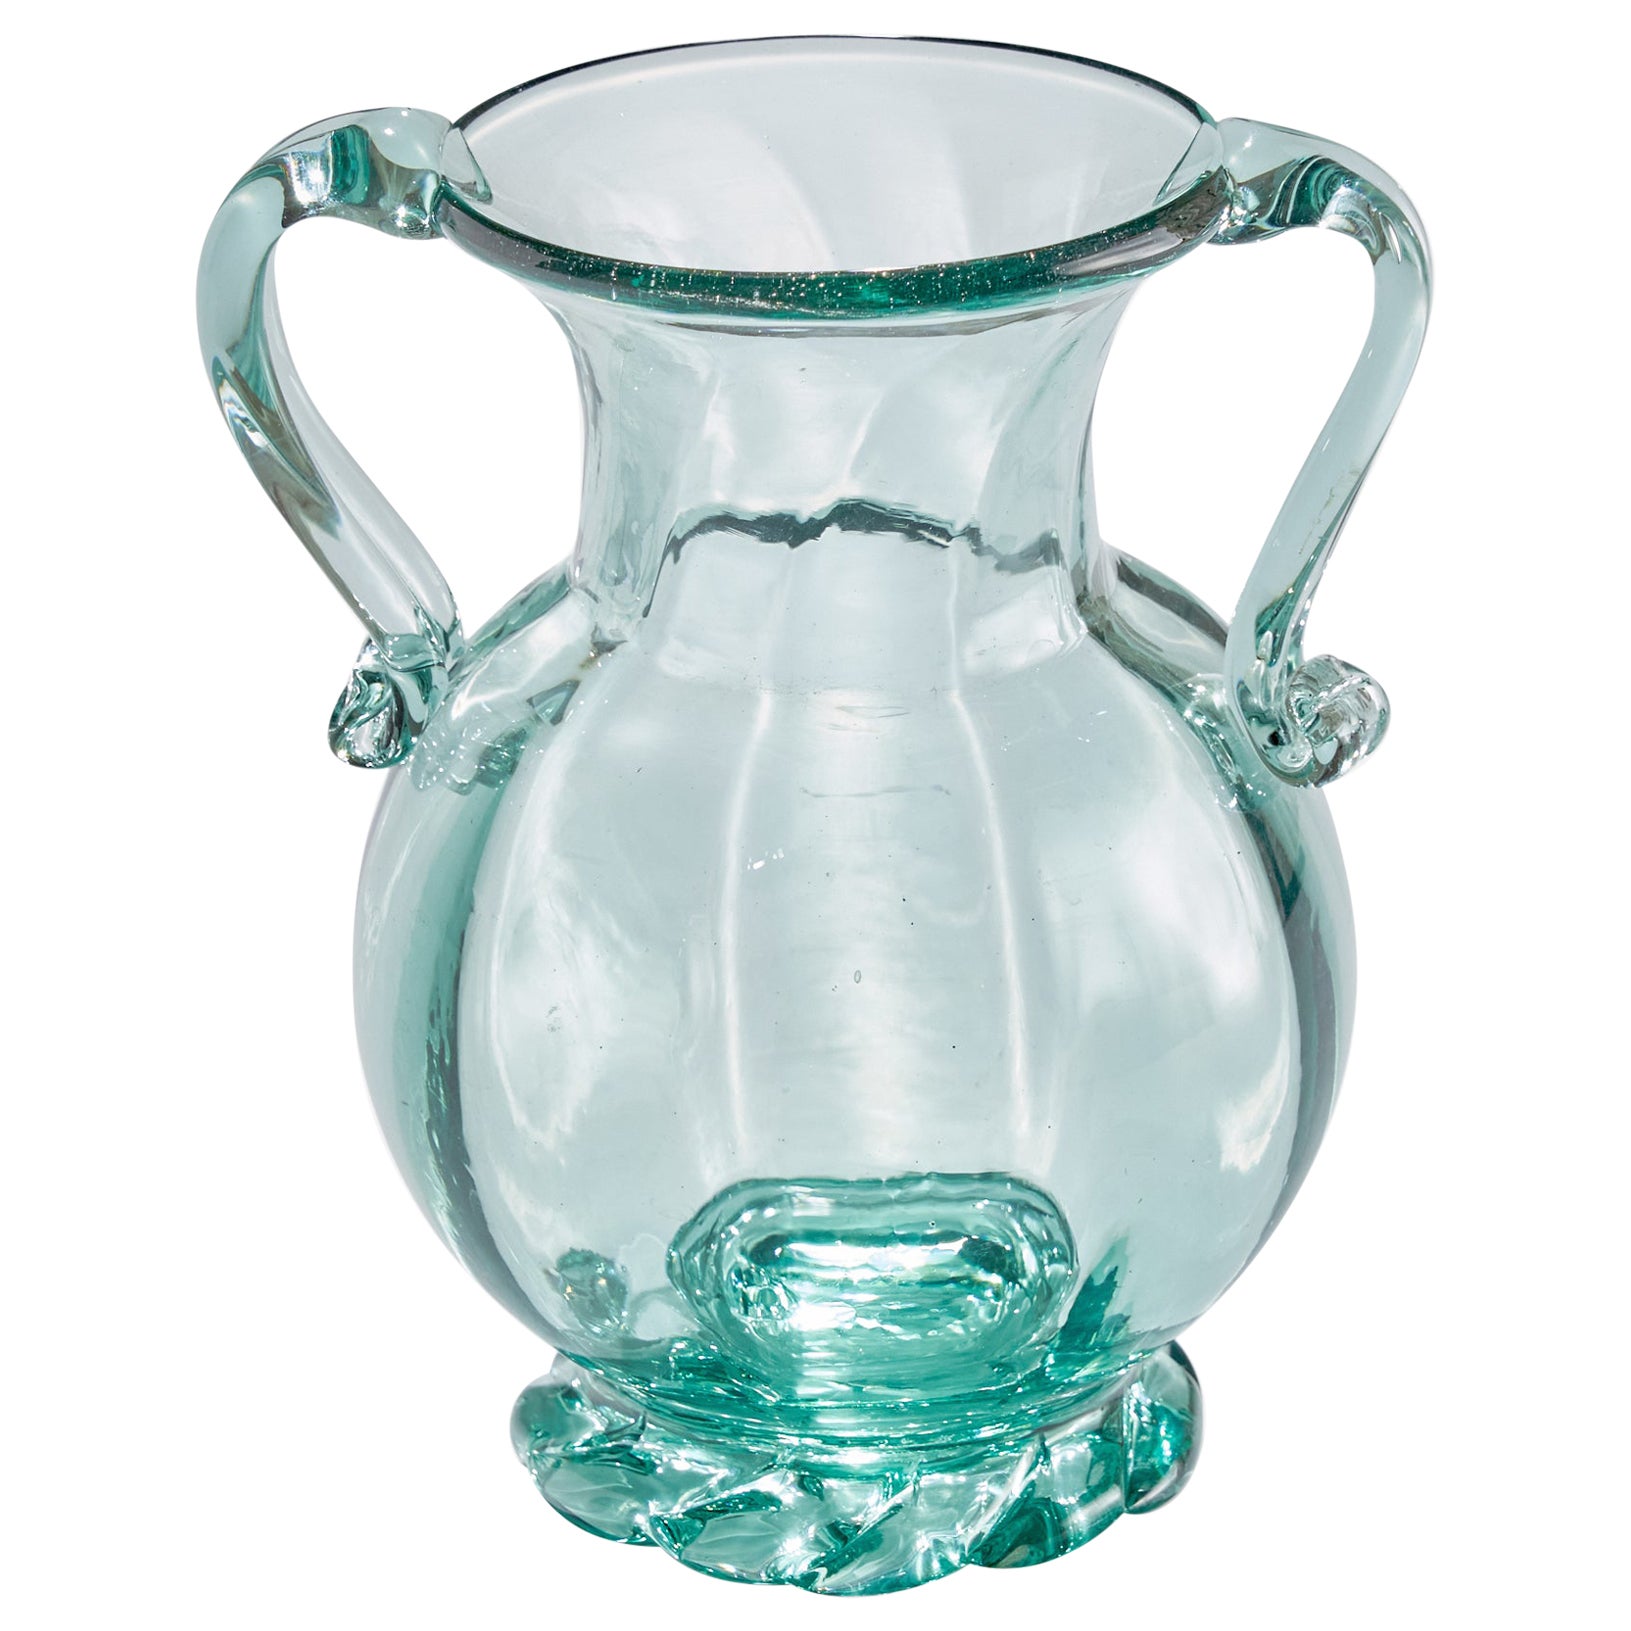 Ture Berglund, Vase, Glass, Sweden, 1940s